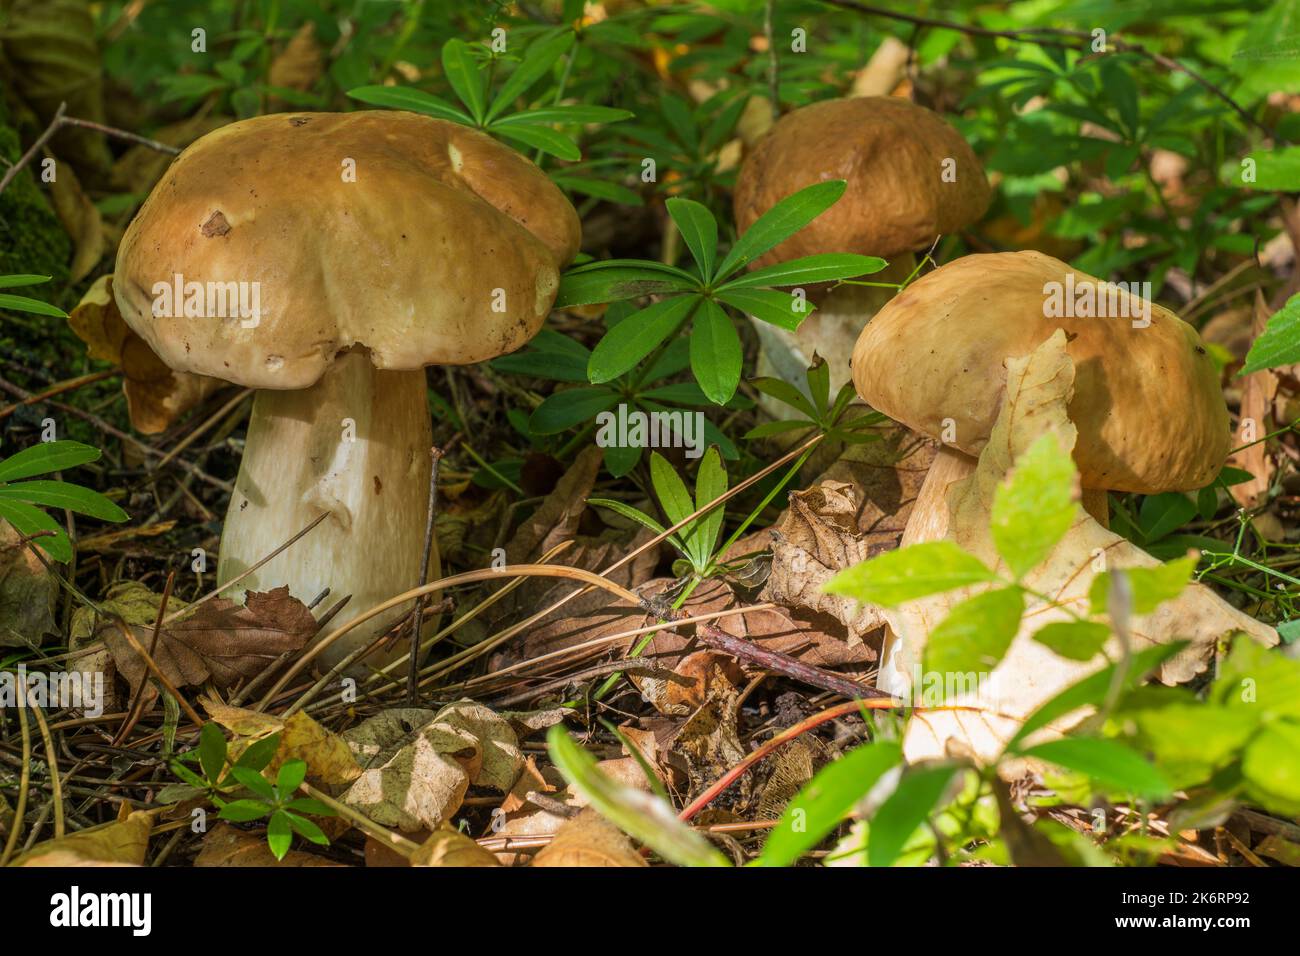 three yellow boletus mushrooms in the forest Stock Photo